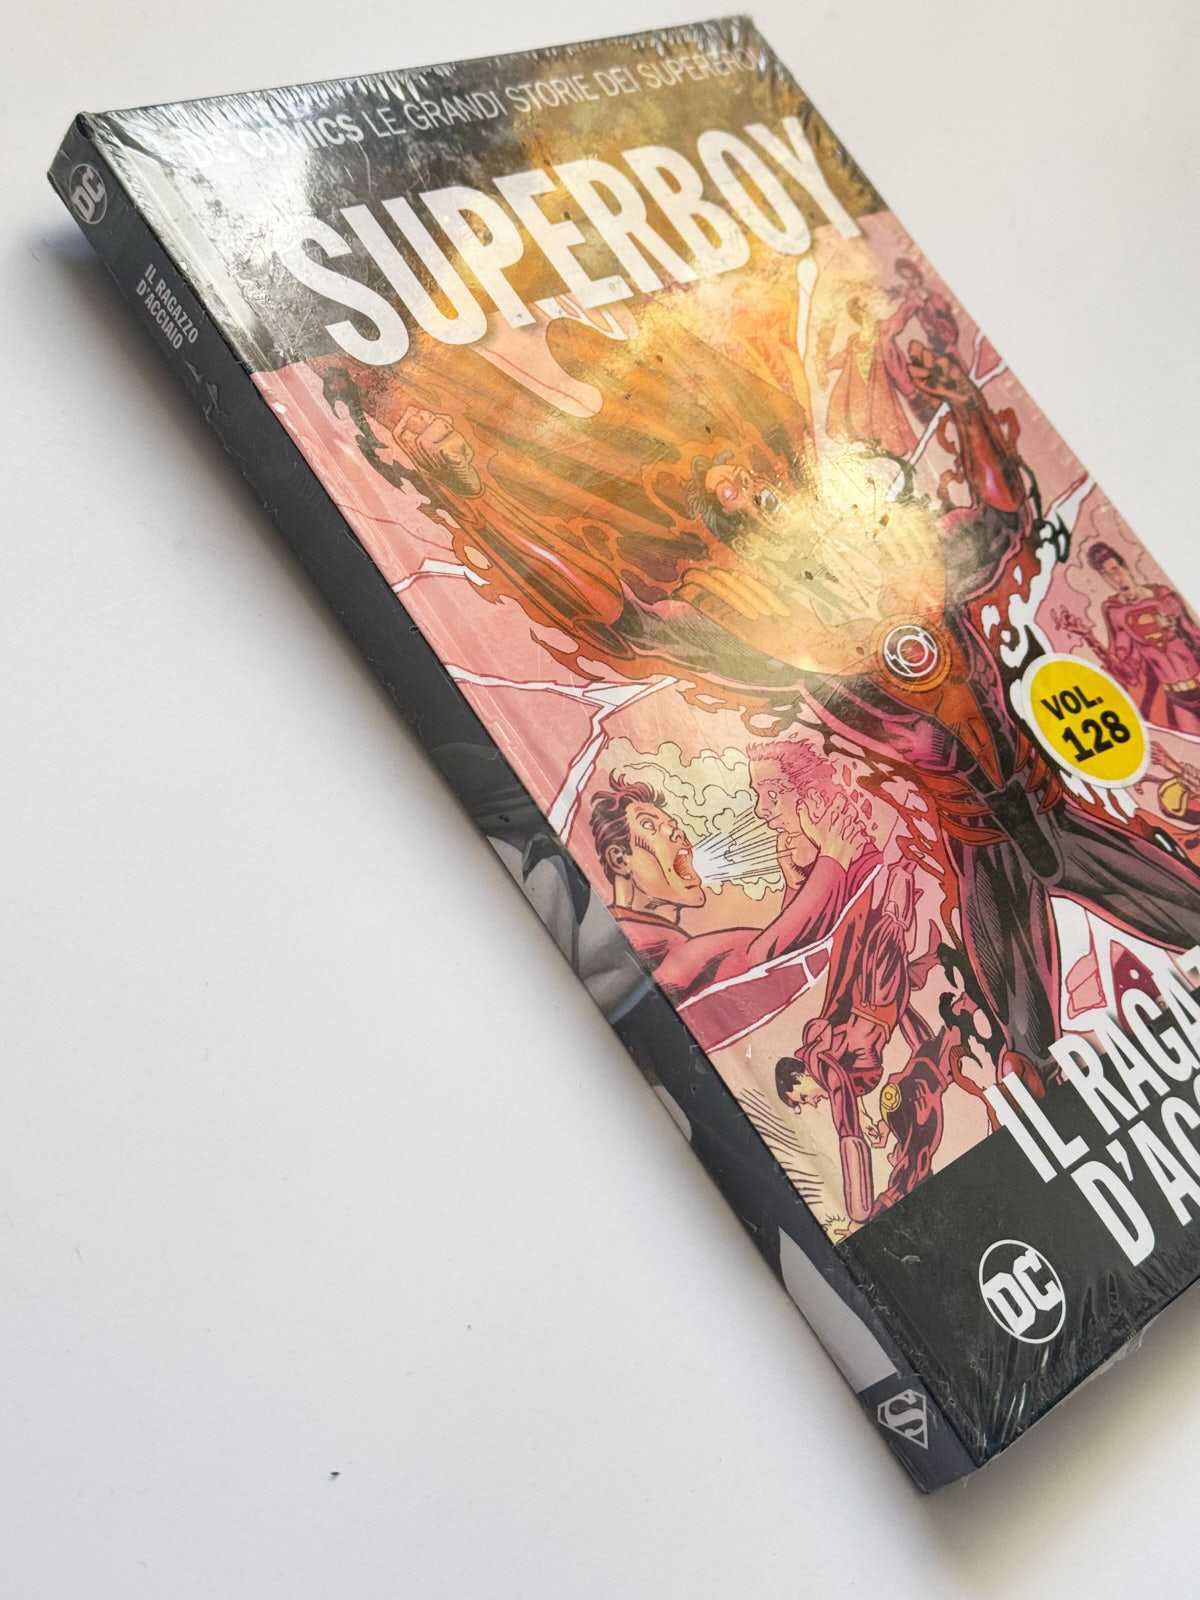 Le Grandi Storie Dei Supereroi - Superboy (komiks włoski)